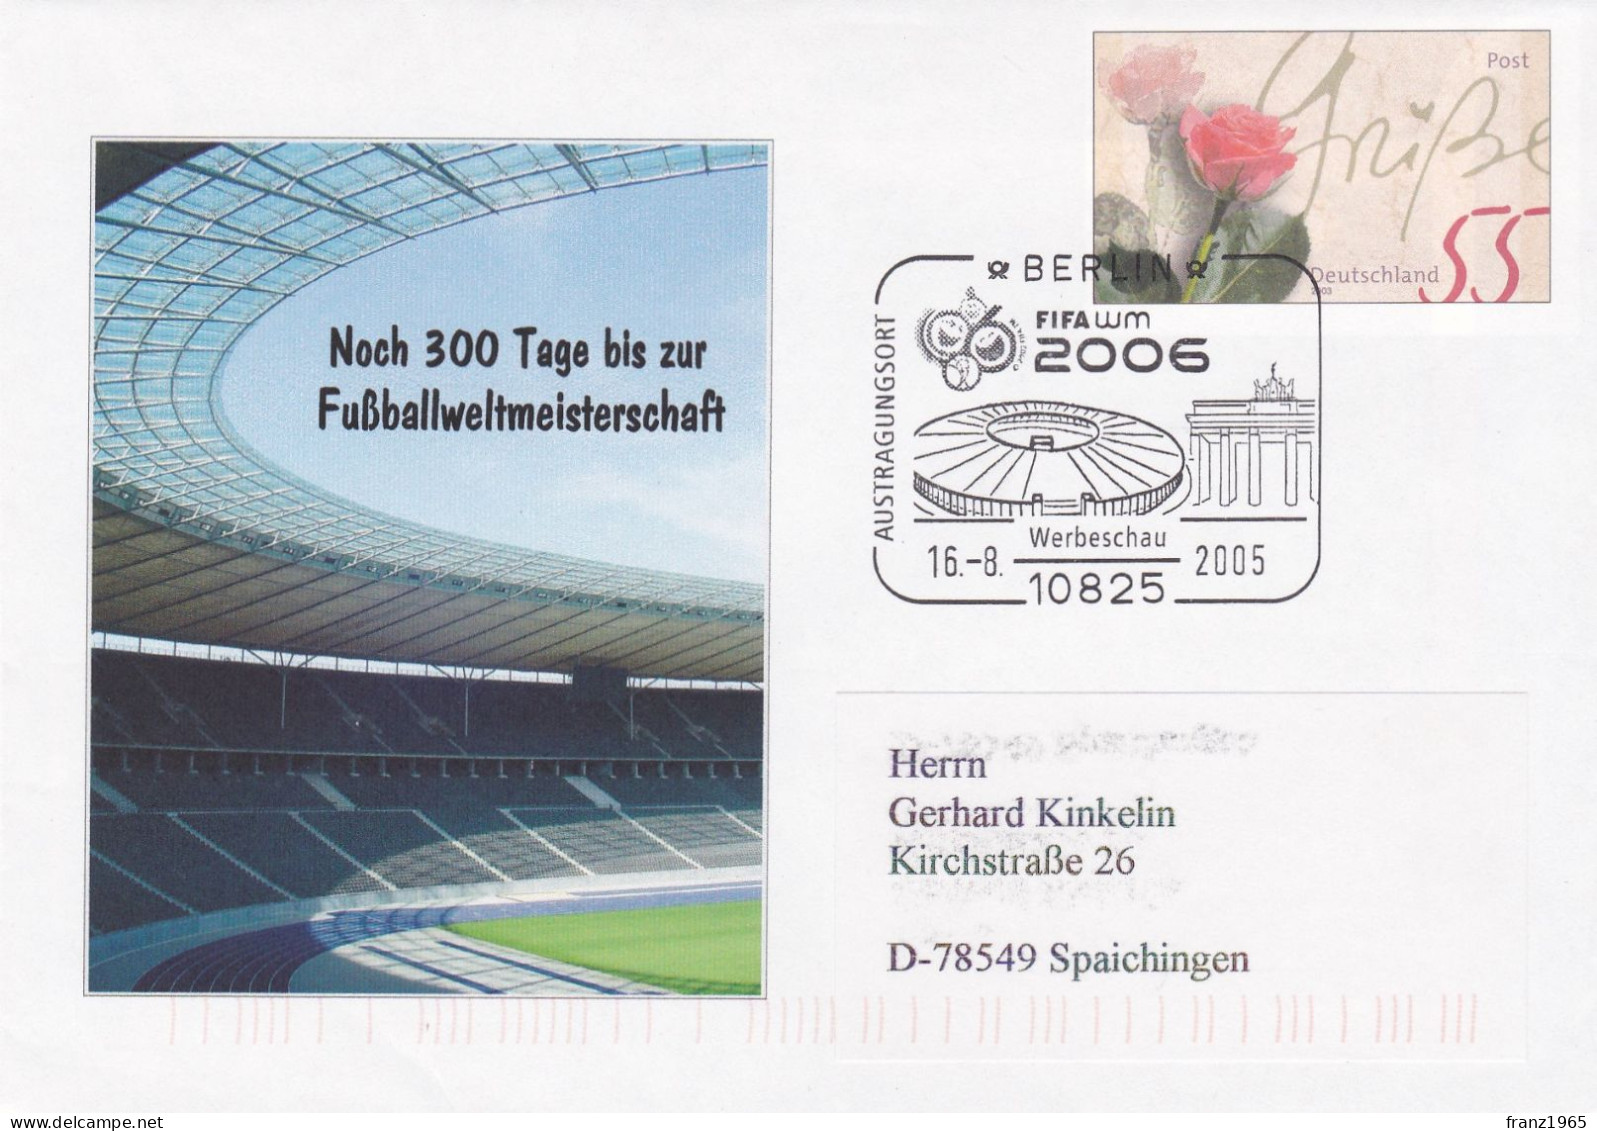 FIFA-WM 2006 - Berlin,16.8.2005 - 2006 – Allemagne